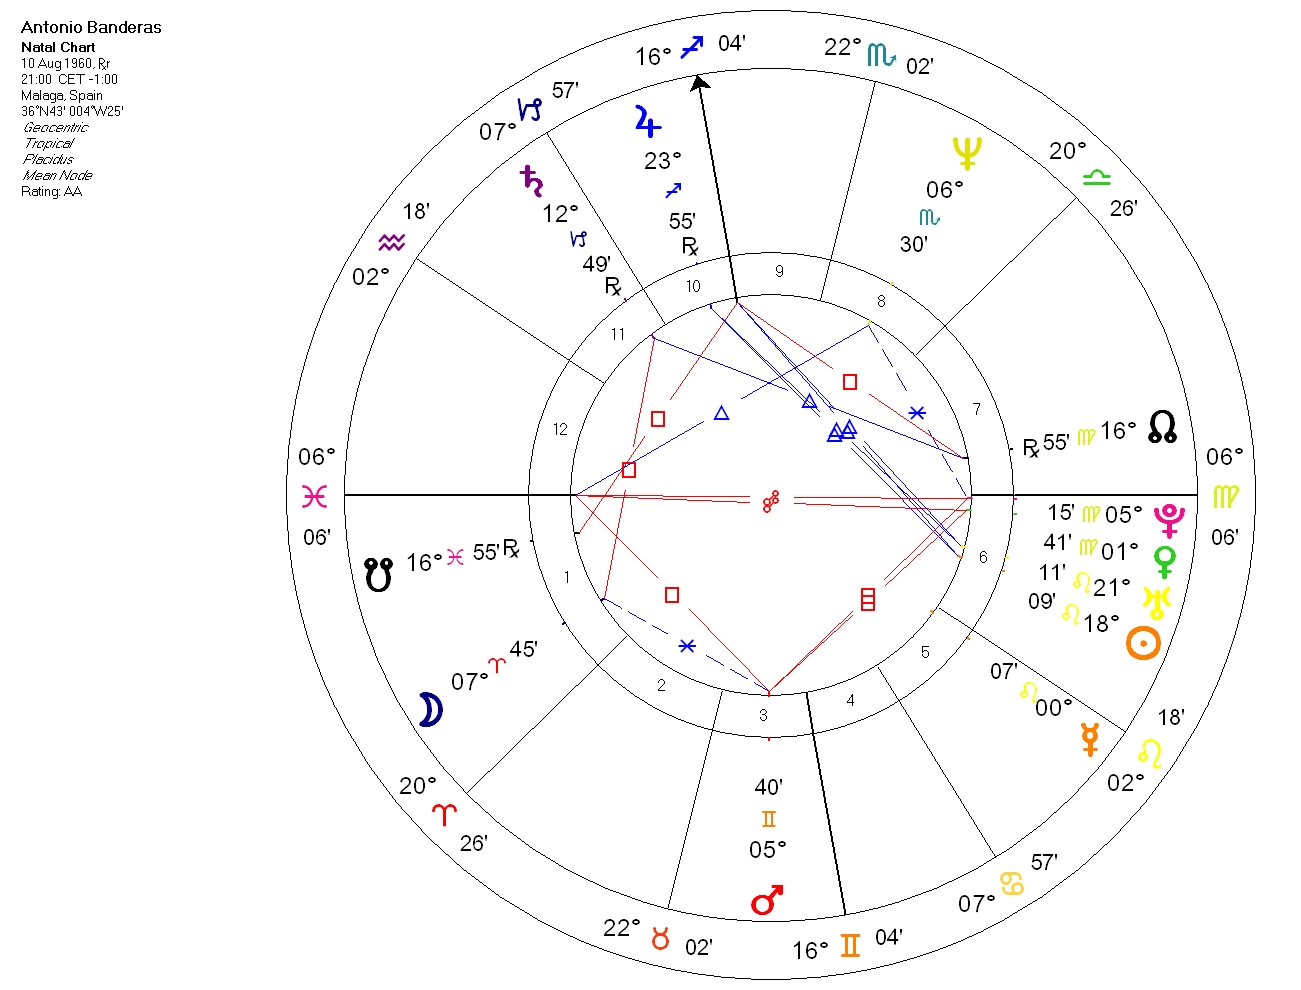 Antonio Banderas - horoskop urodzeniowy